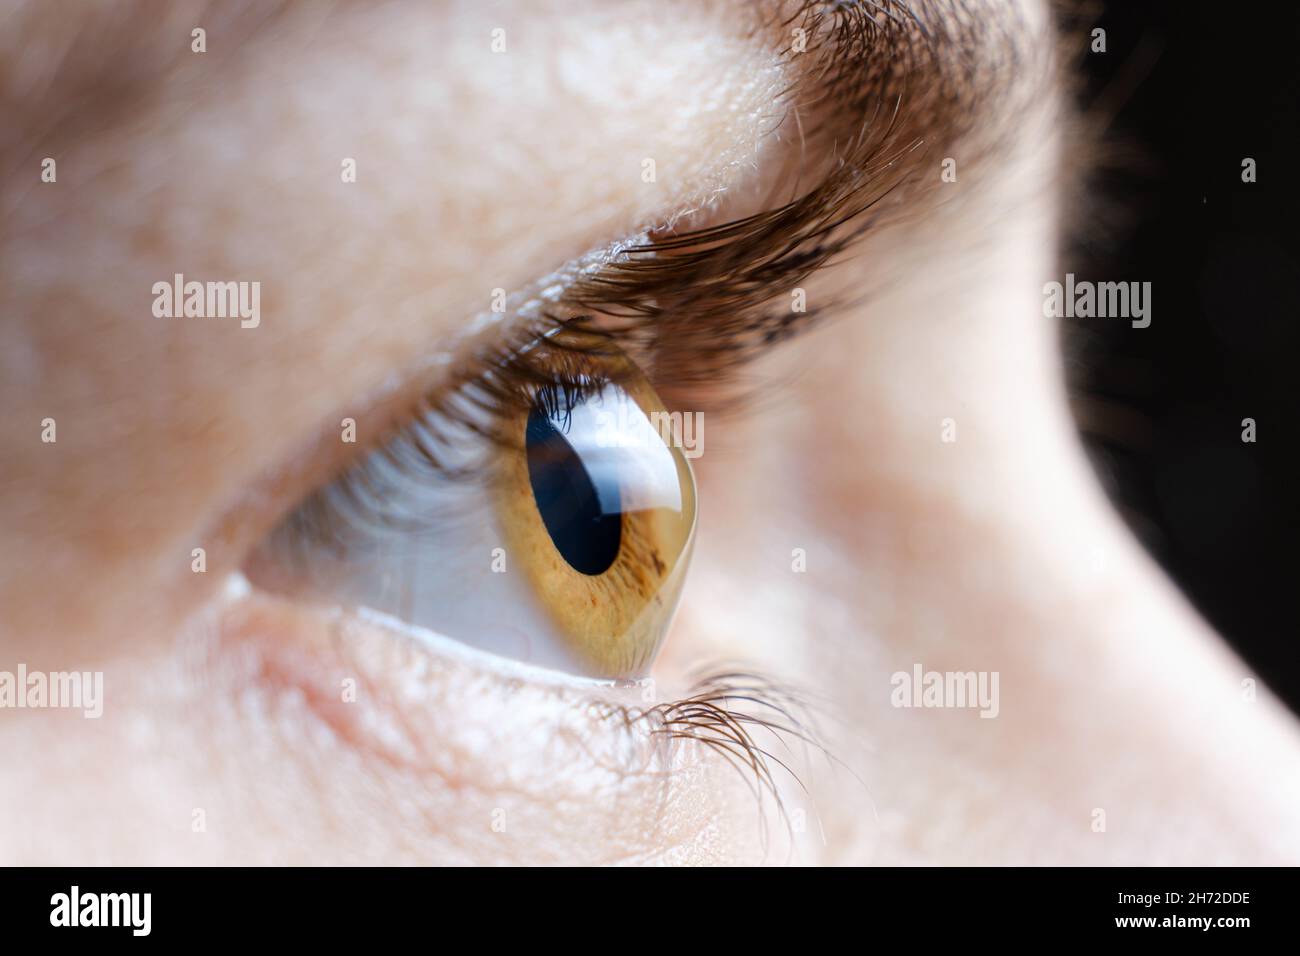 Macro photo of the human eye with corneal disease keratoconus Stock Photo